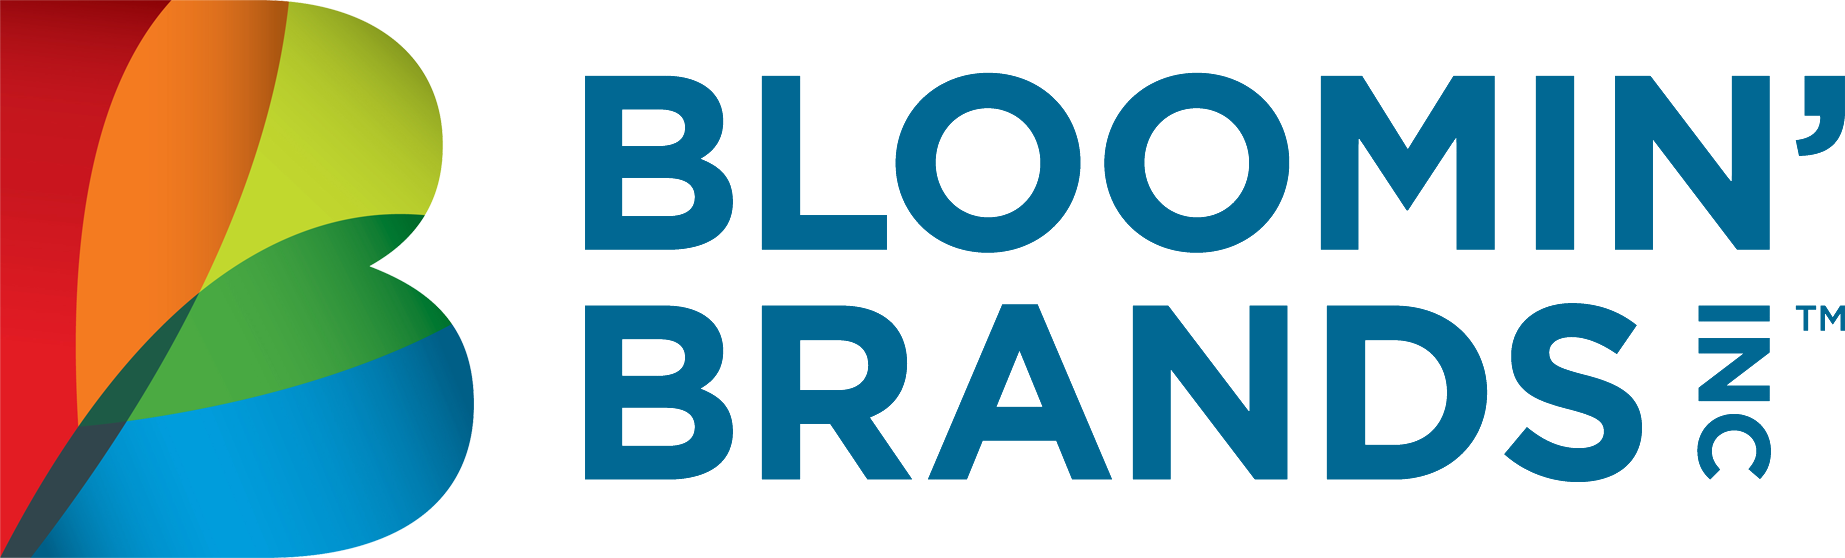 Bloomin' Brands - Restauarant Supply Chain Case Study